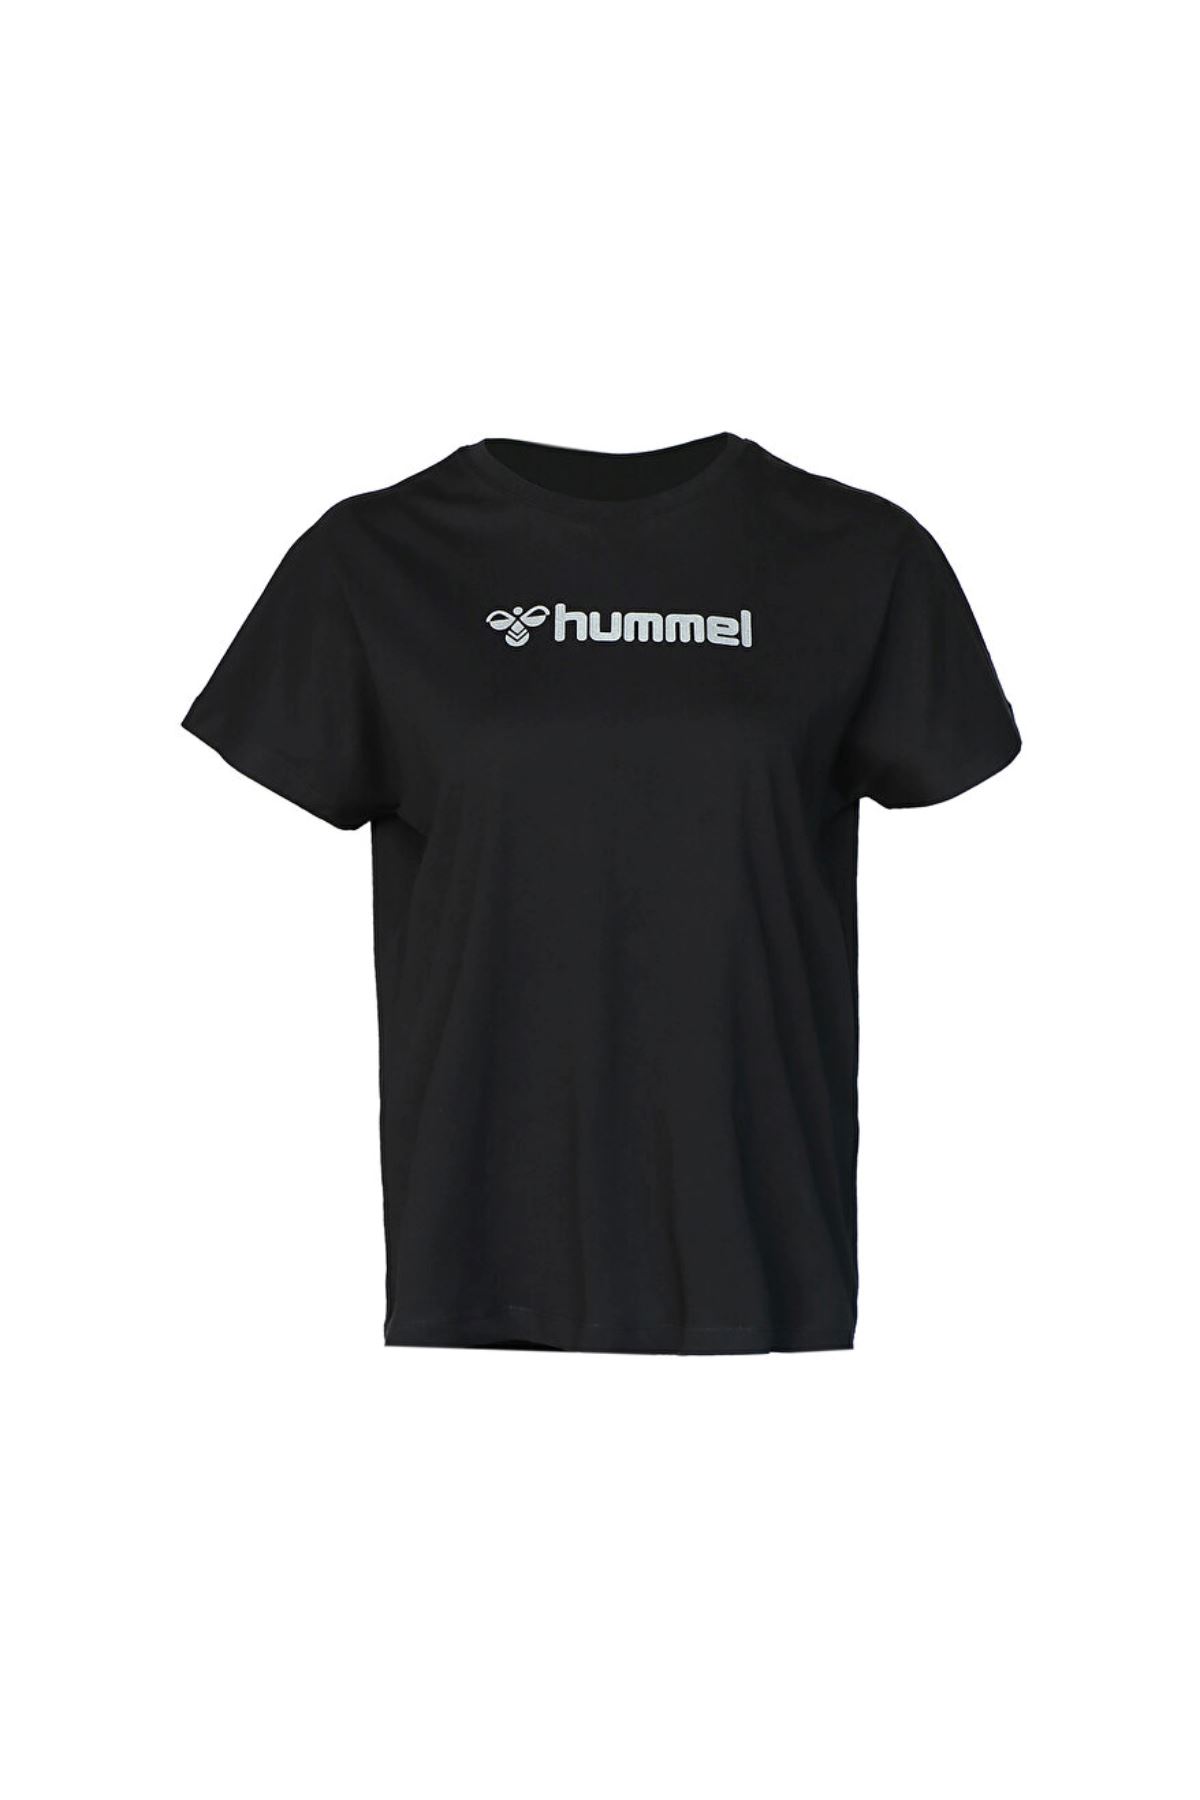 Hummel Hmlarwıd Kadın Siyah Tişört - 911636-2001